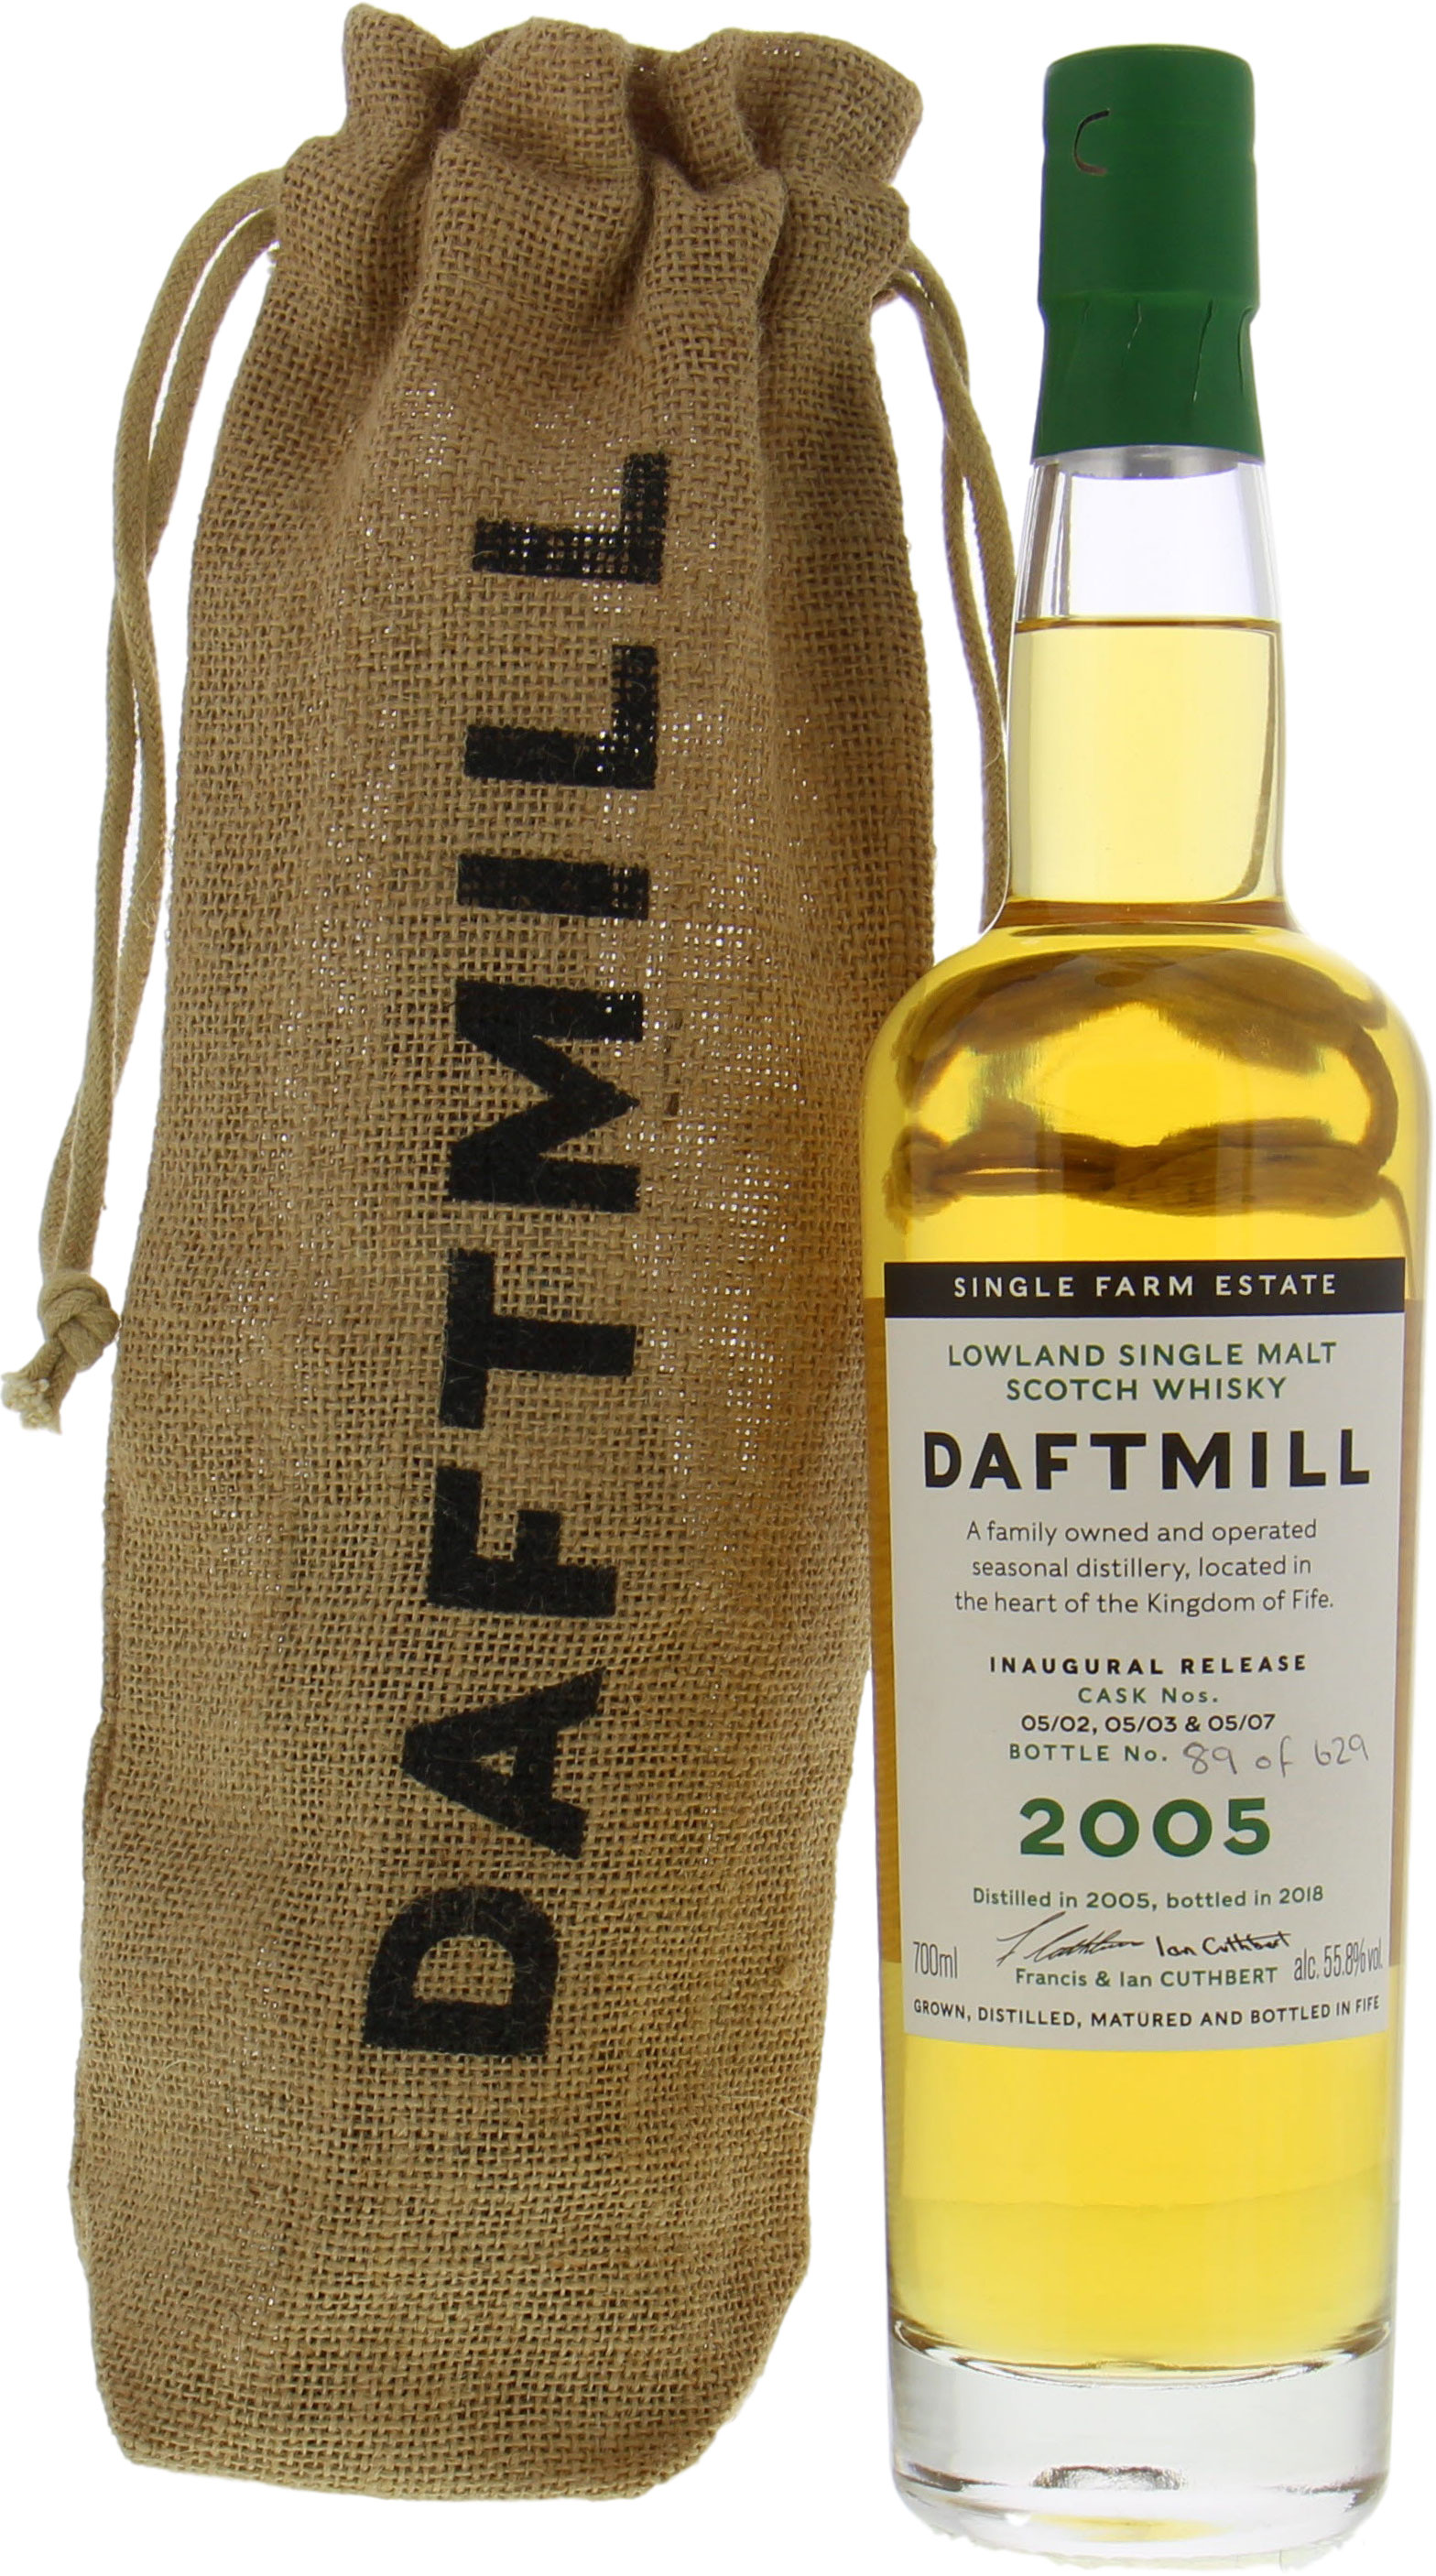 Daftmill - Inaugural Release 2005 55.8% 2005